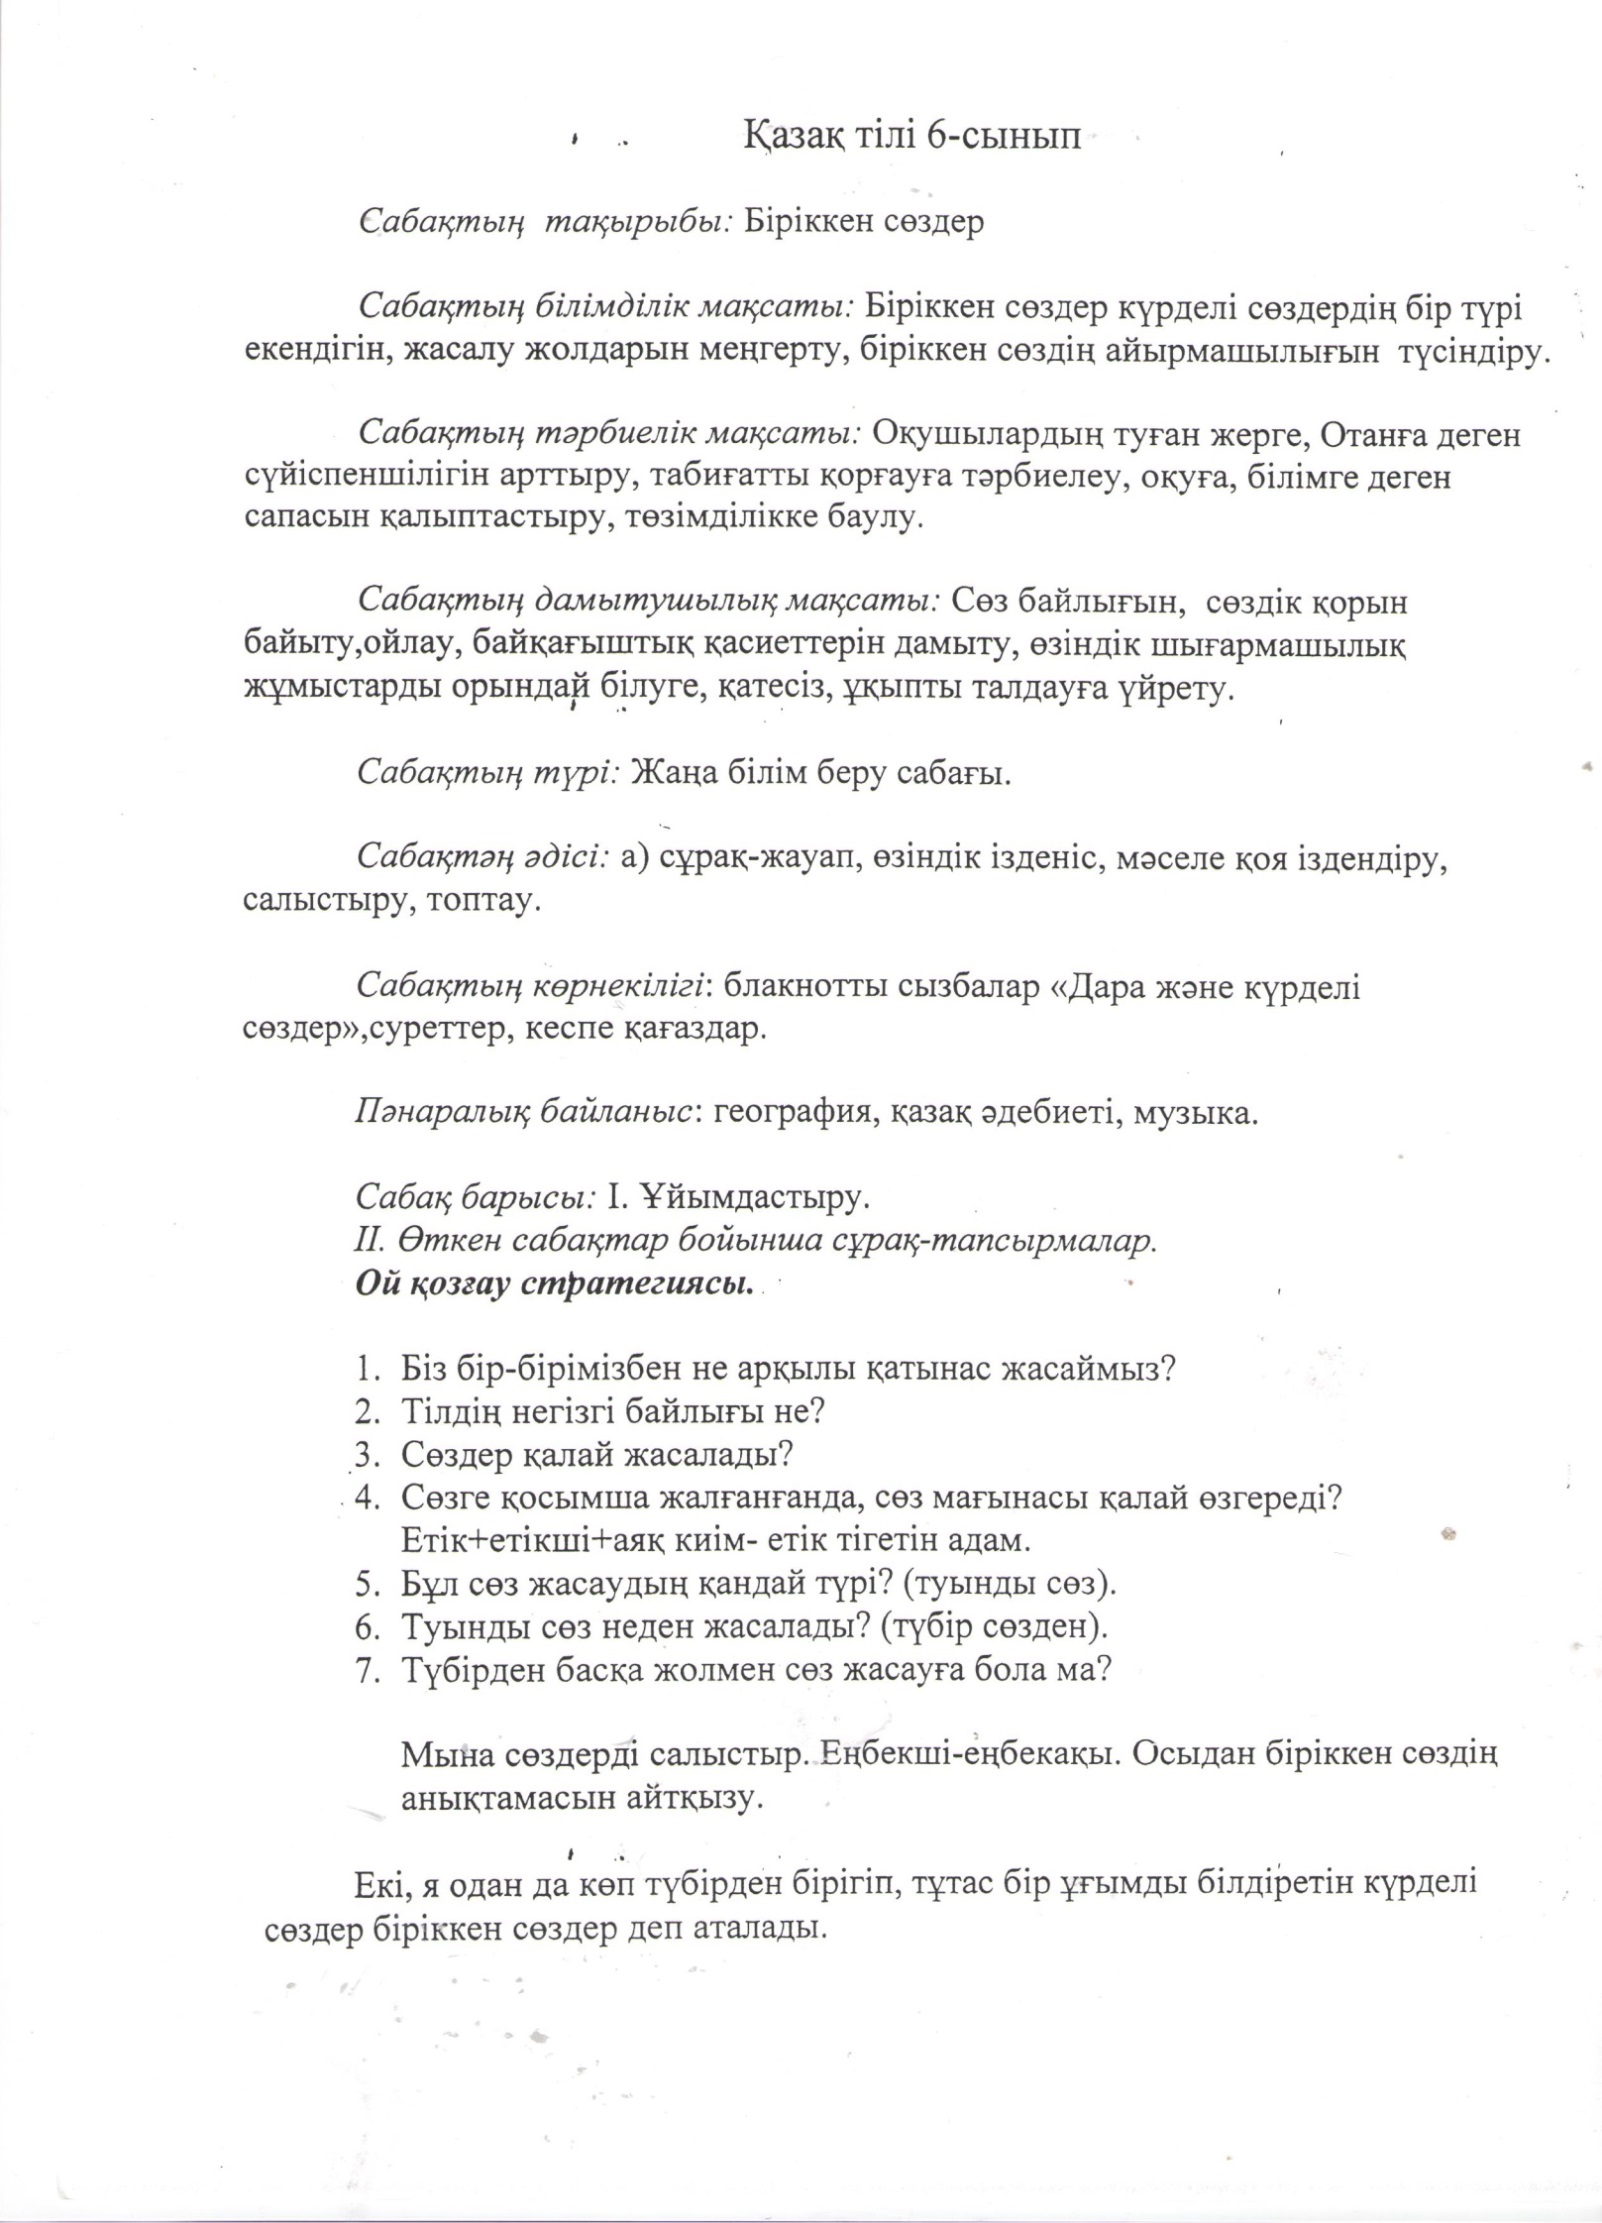 Разработка урока по казахскому языку на тему Біріккен сөздер (6 класс)